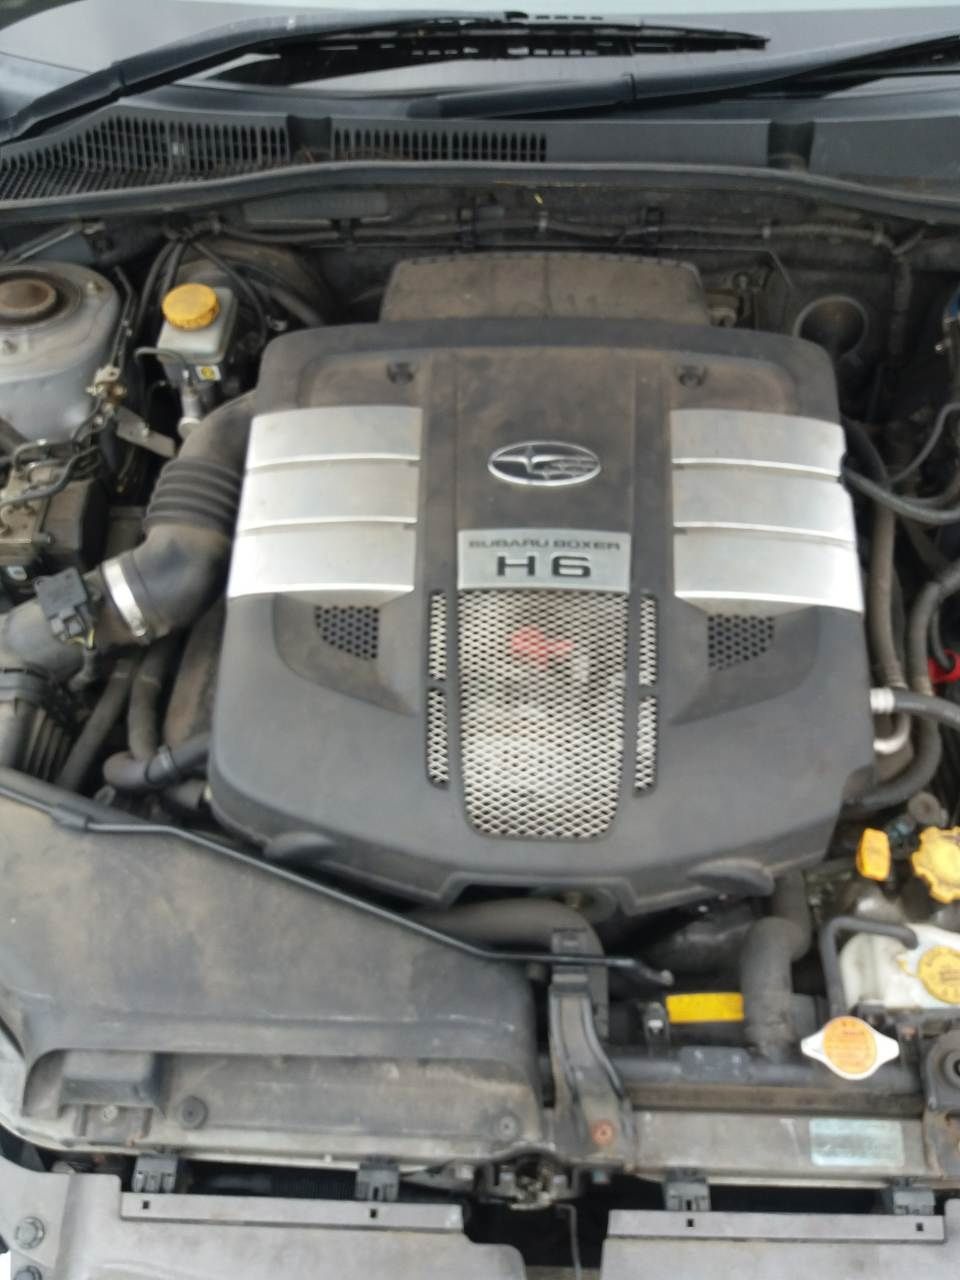 Мотор двигатель3.0-3.6-2.5-2.0 subaru outback legacy Tribeca 2005-2008